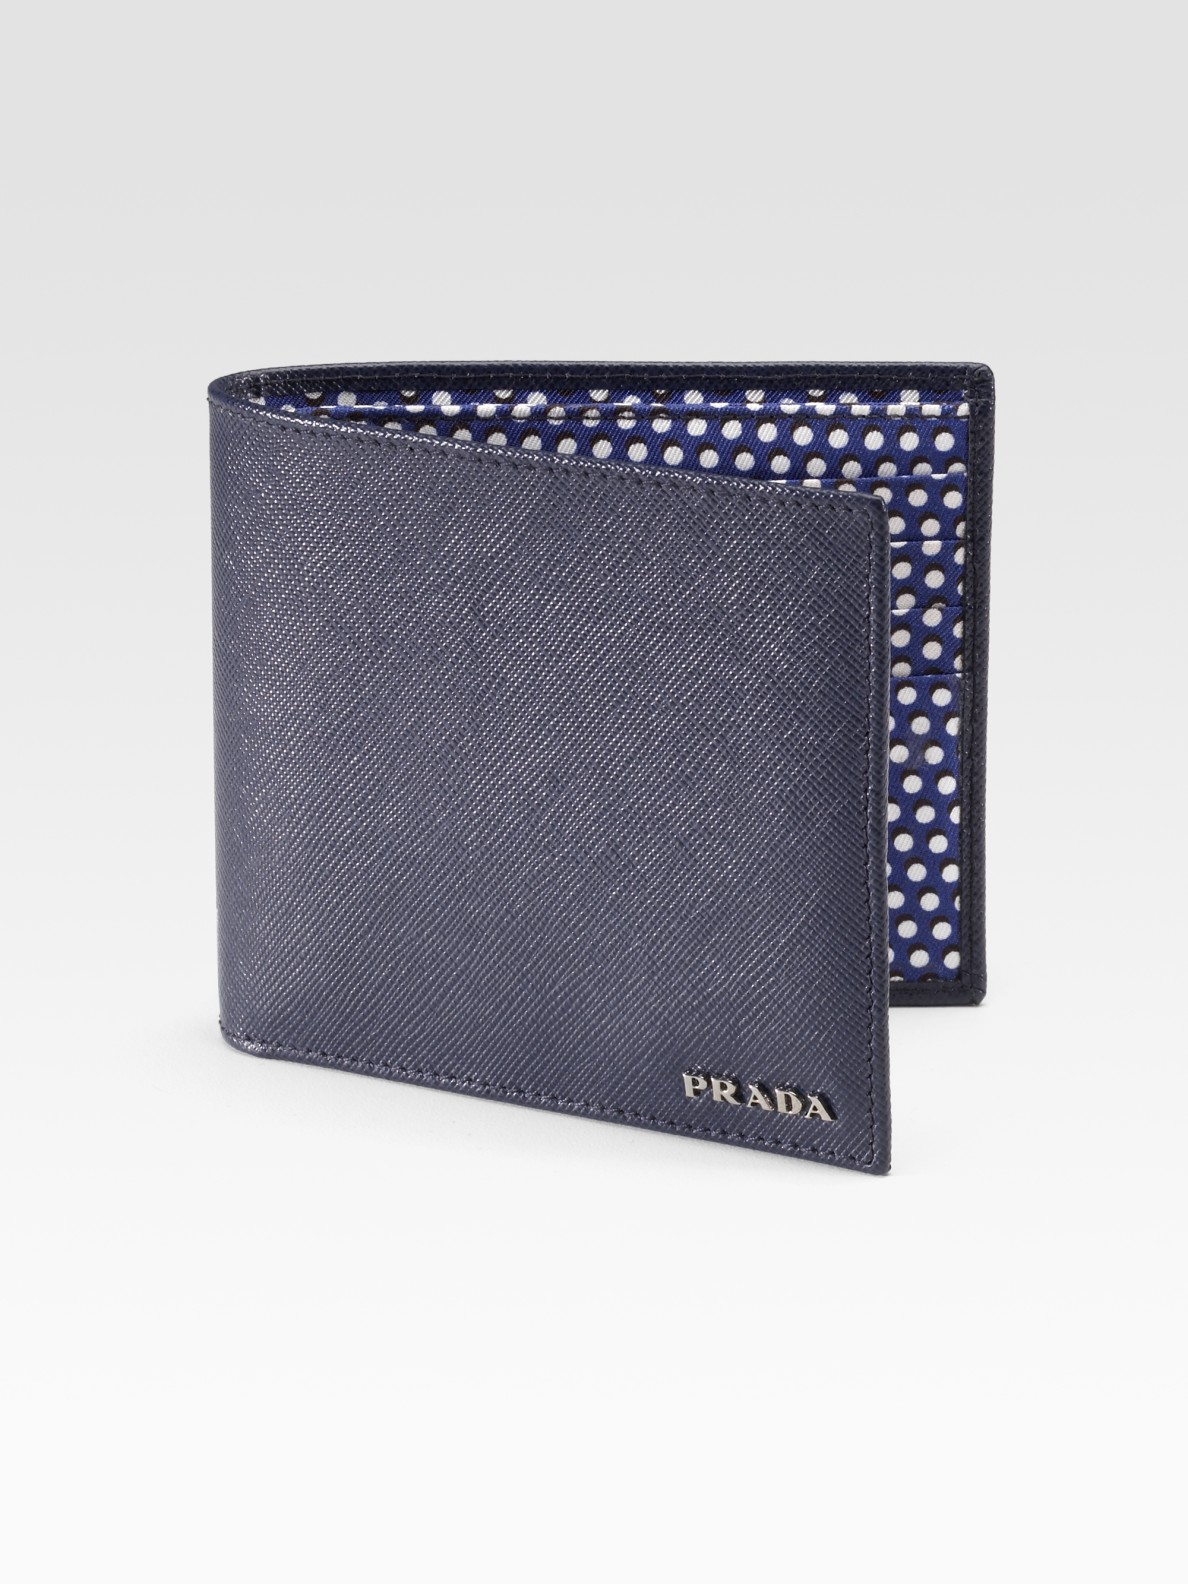 Prada Leather Wallet in Blue for Men | Lyst